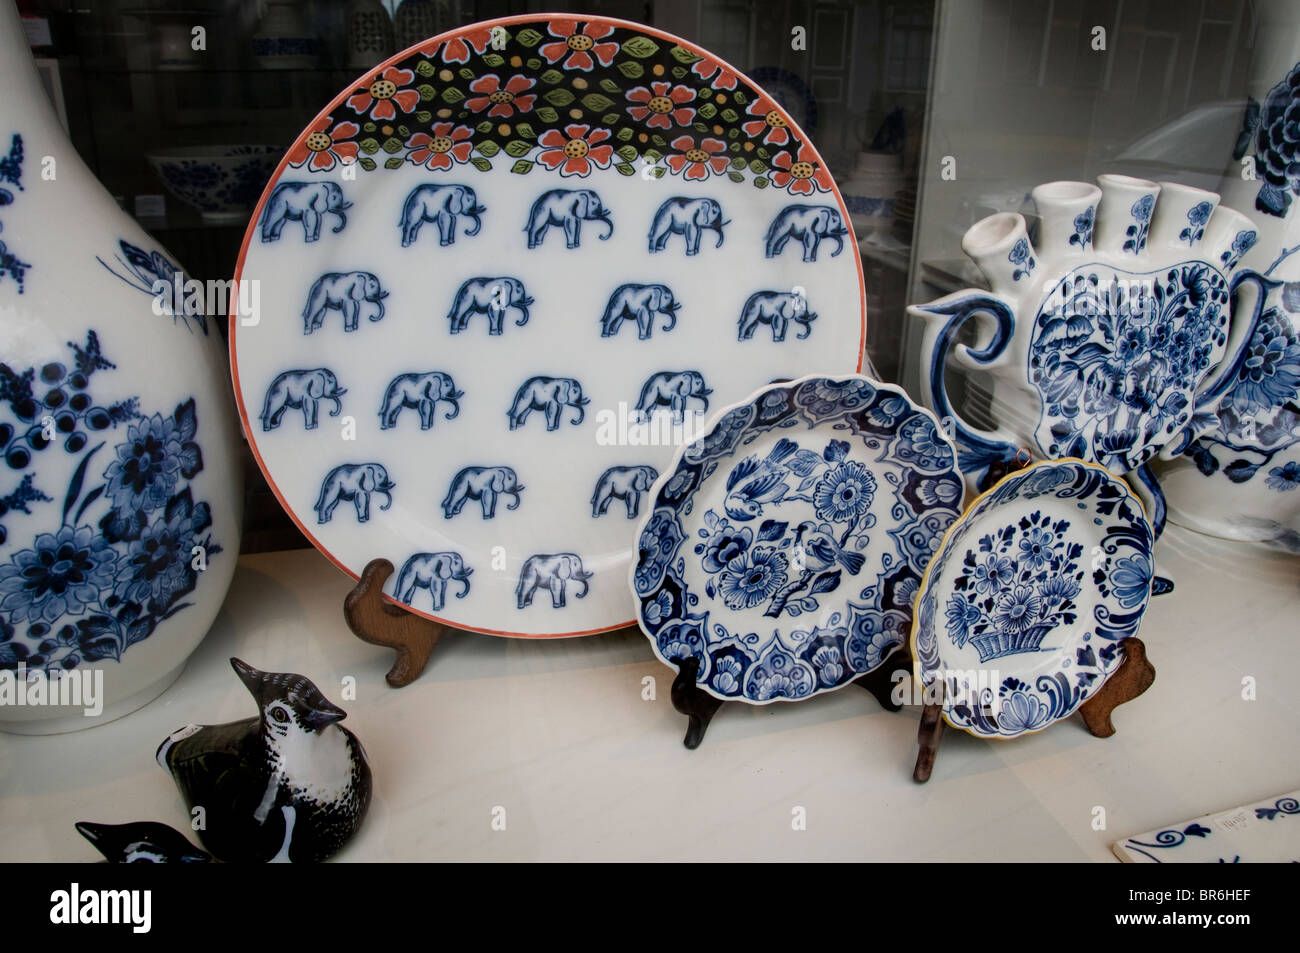 Workum Friesland Netherlands ceramic pottery earthenware plate Stock Photo